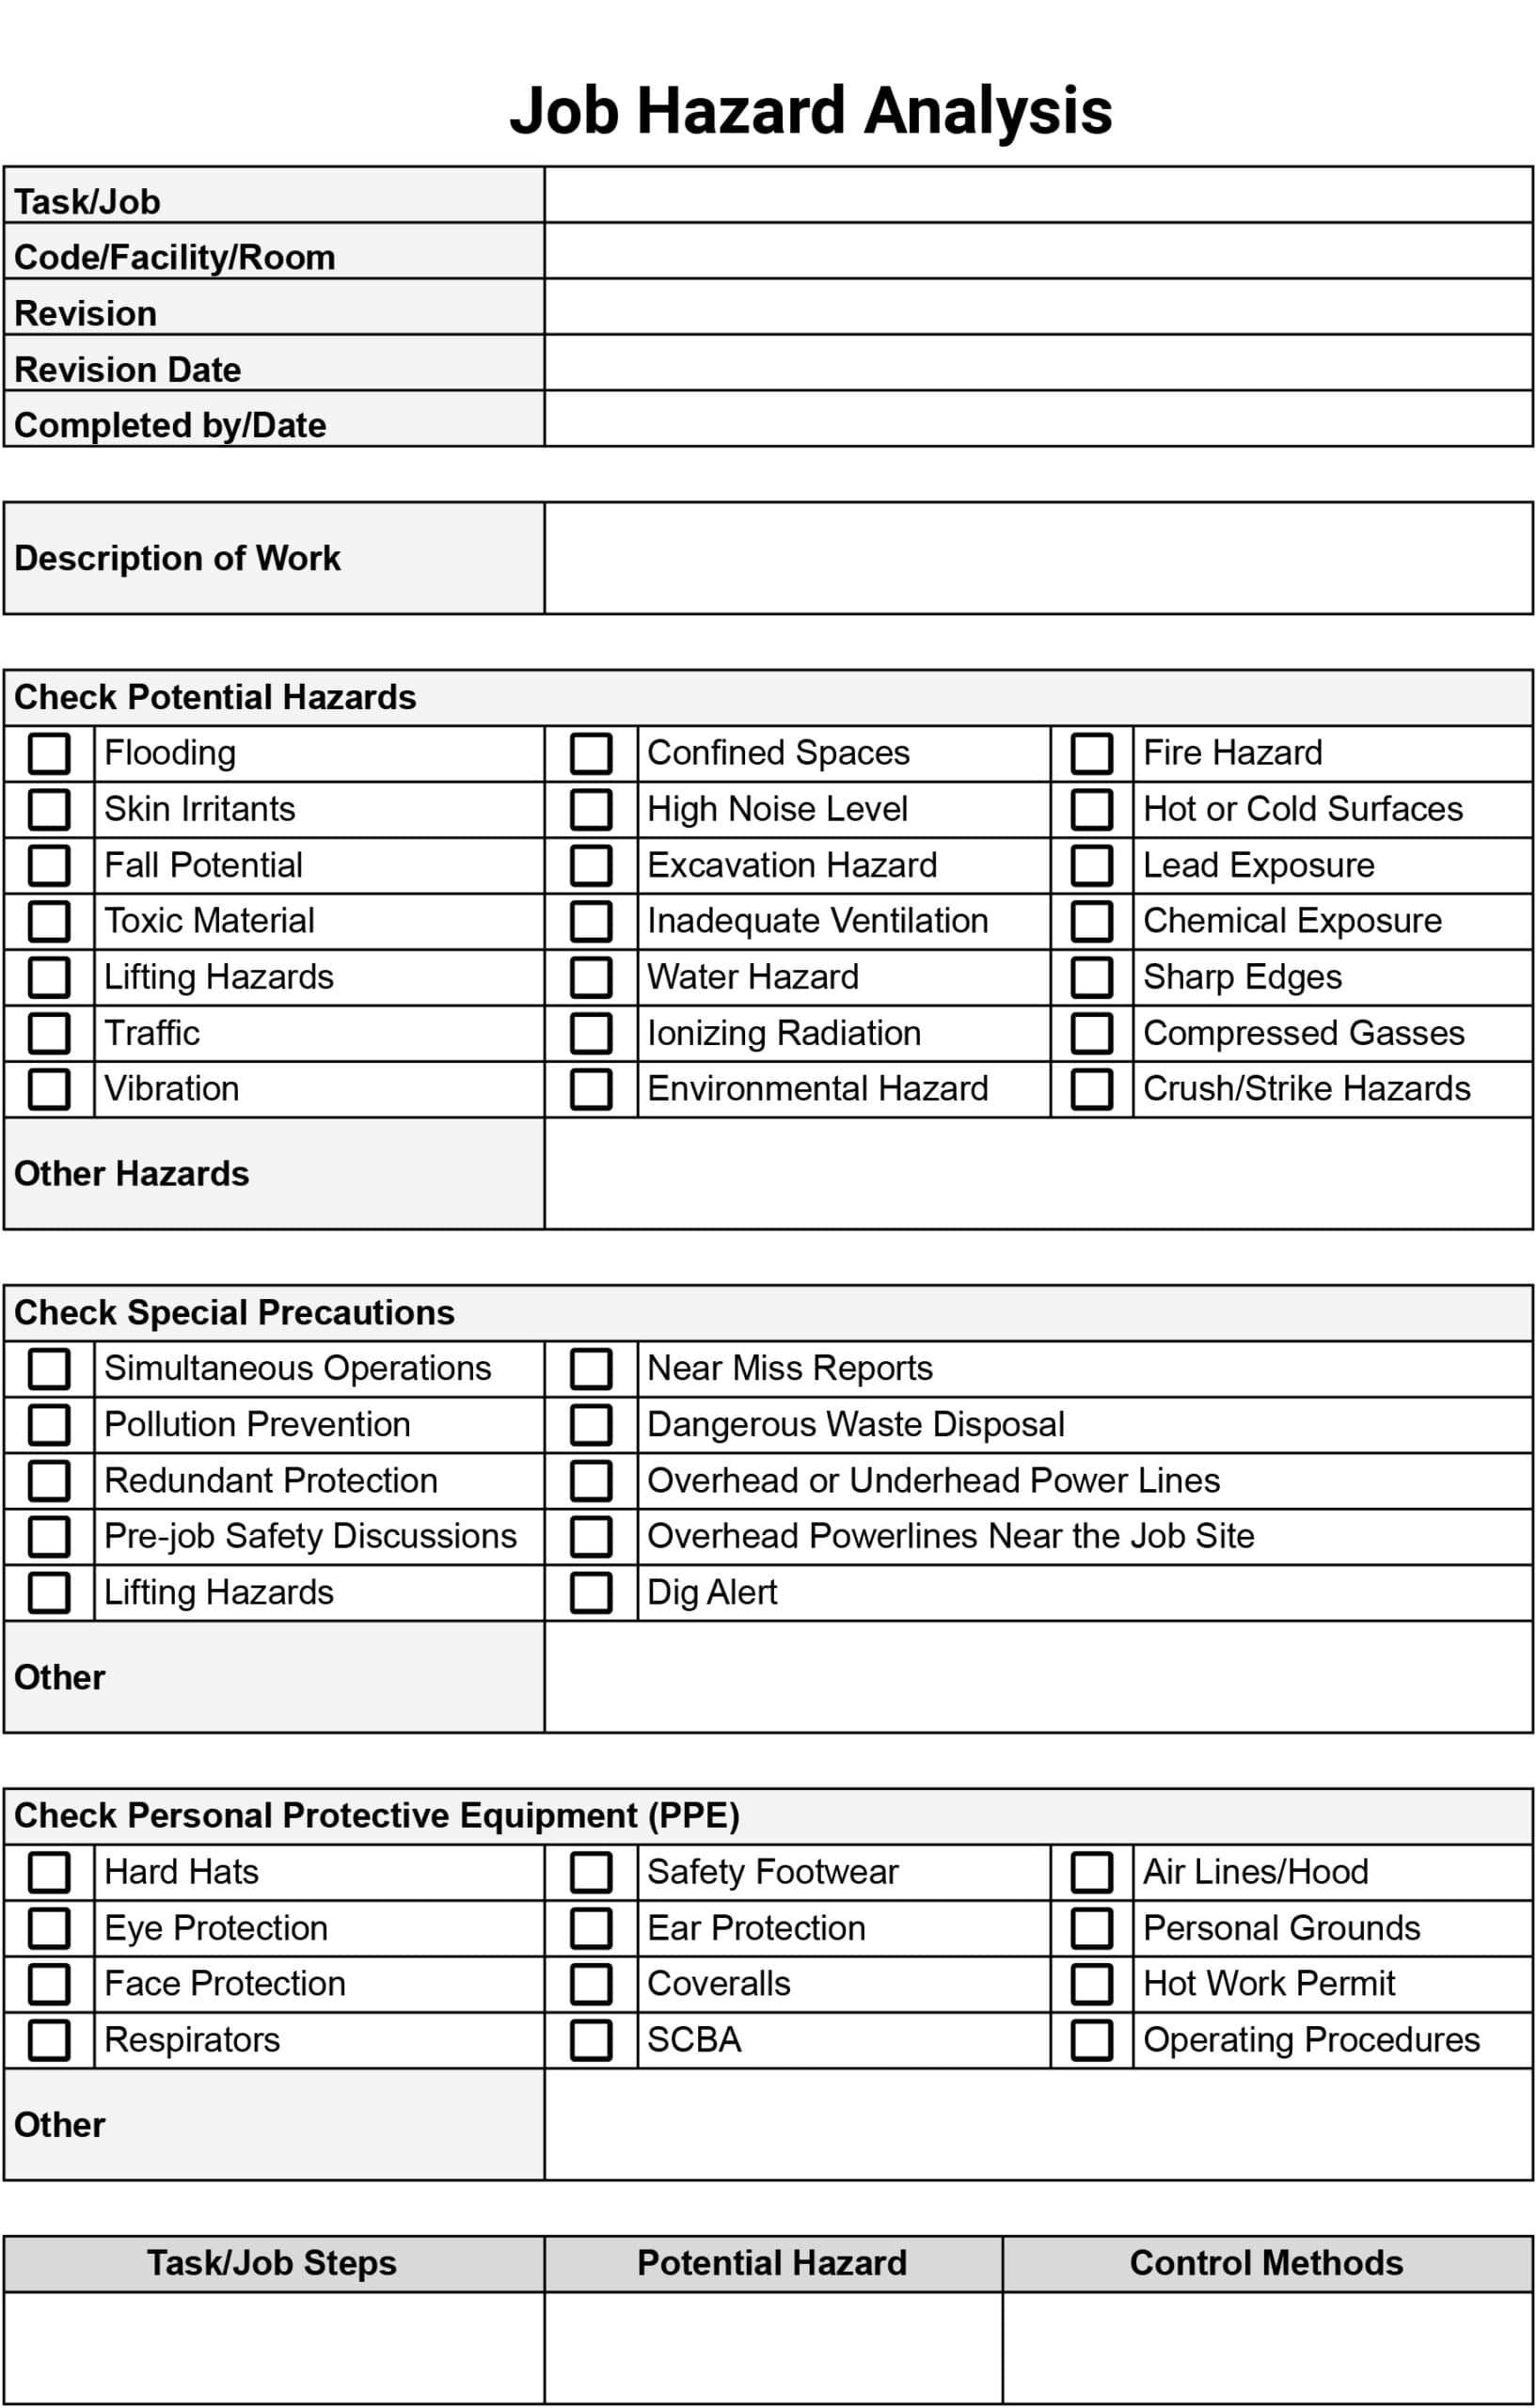 Job Safety Analysis Sheet: Facility, PDF, Personal Protective Equipment